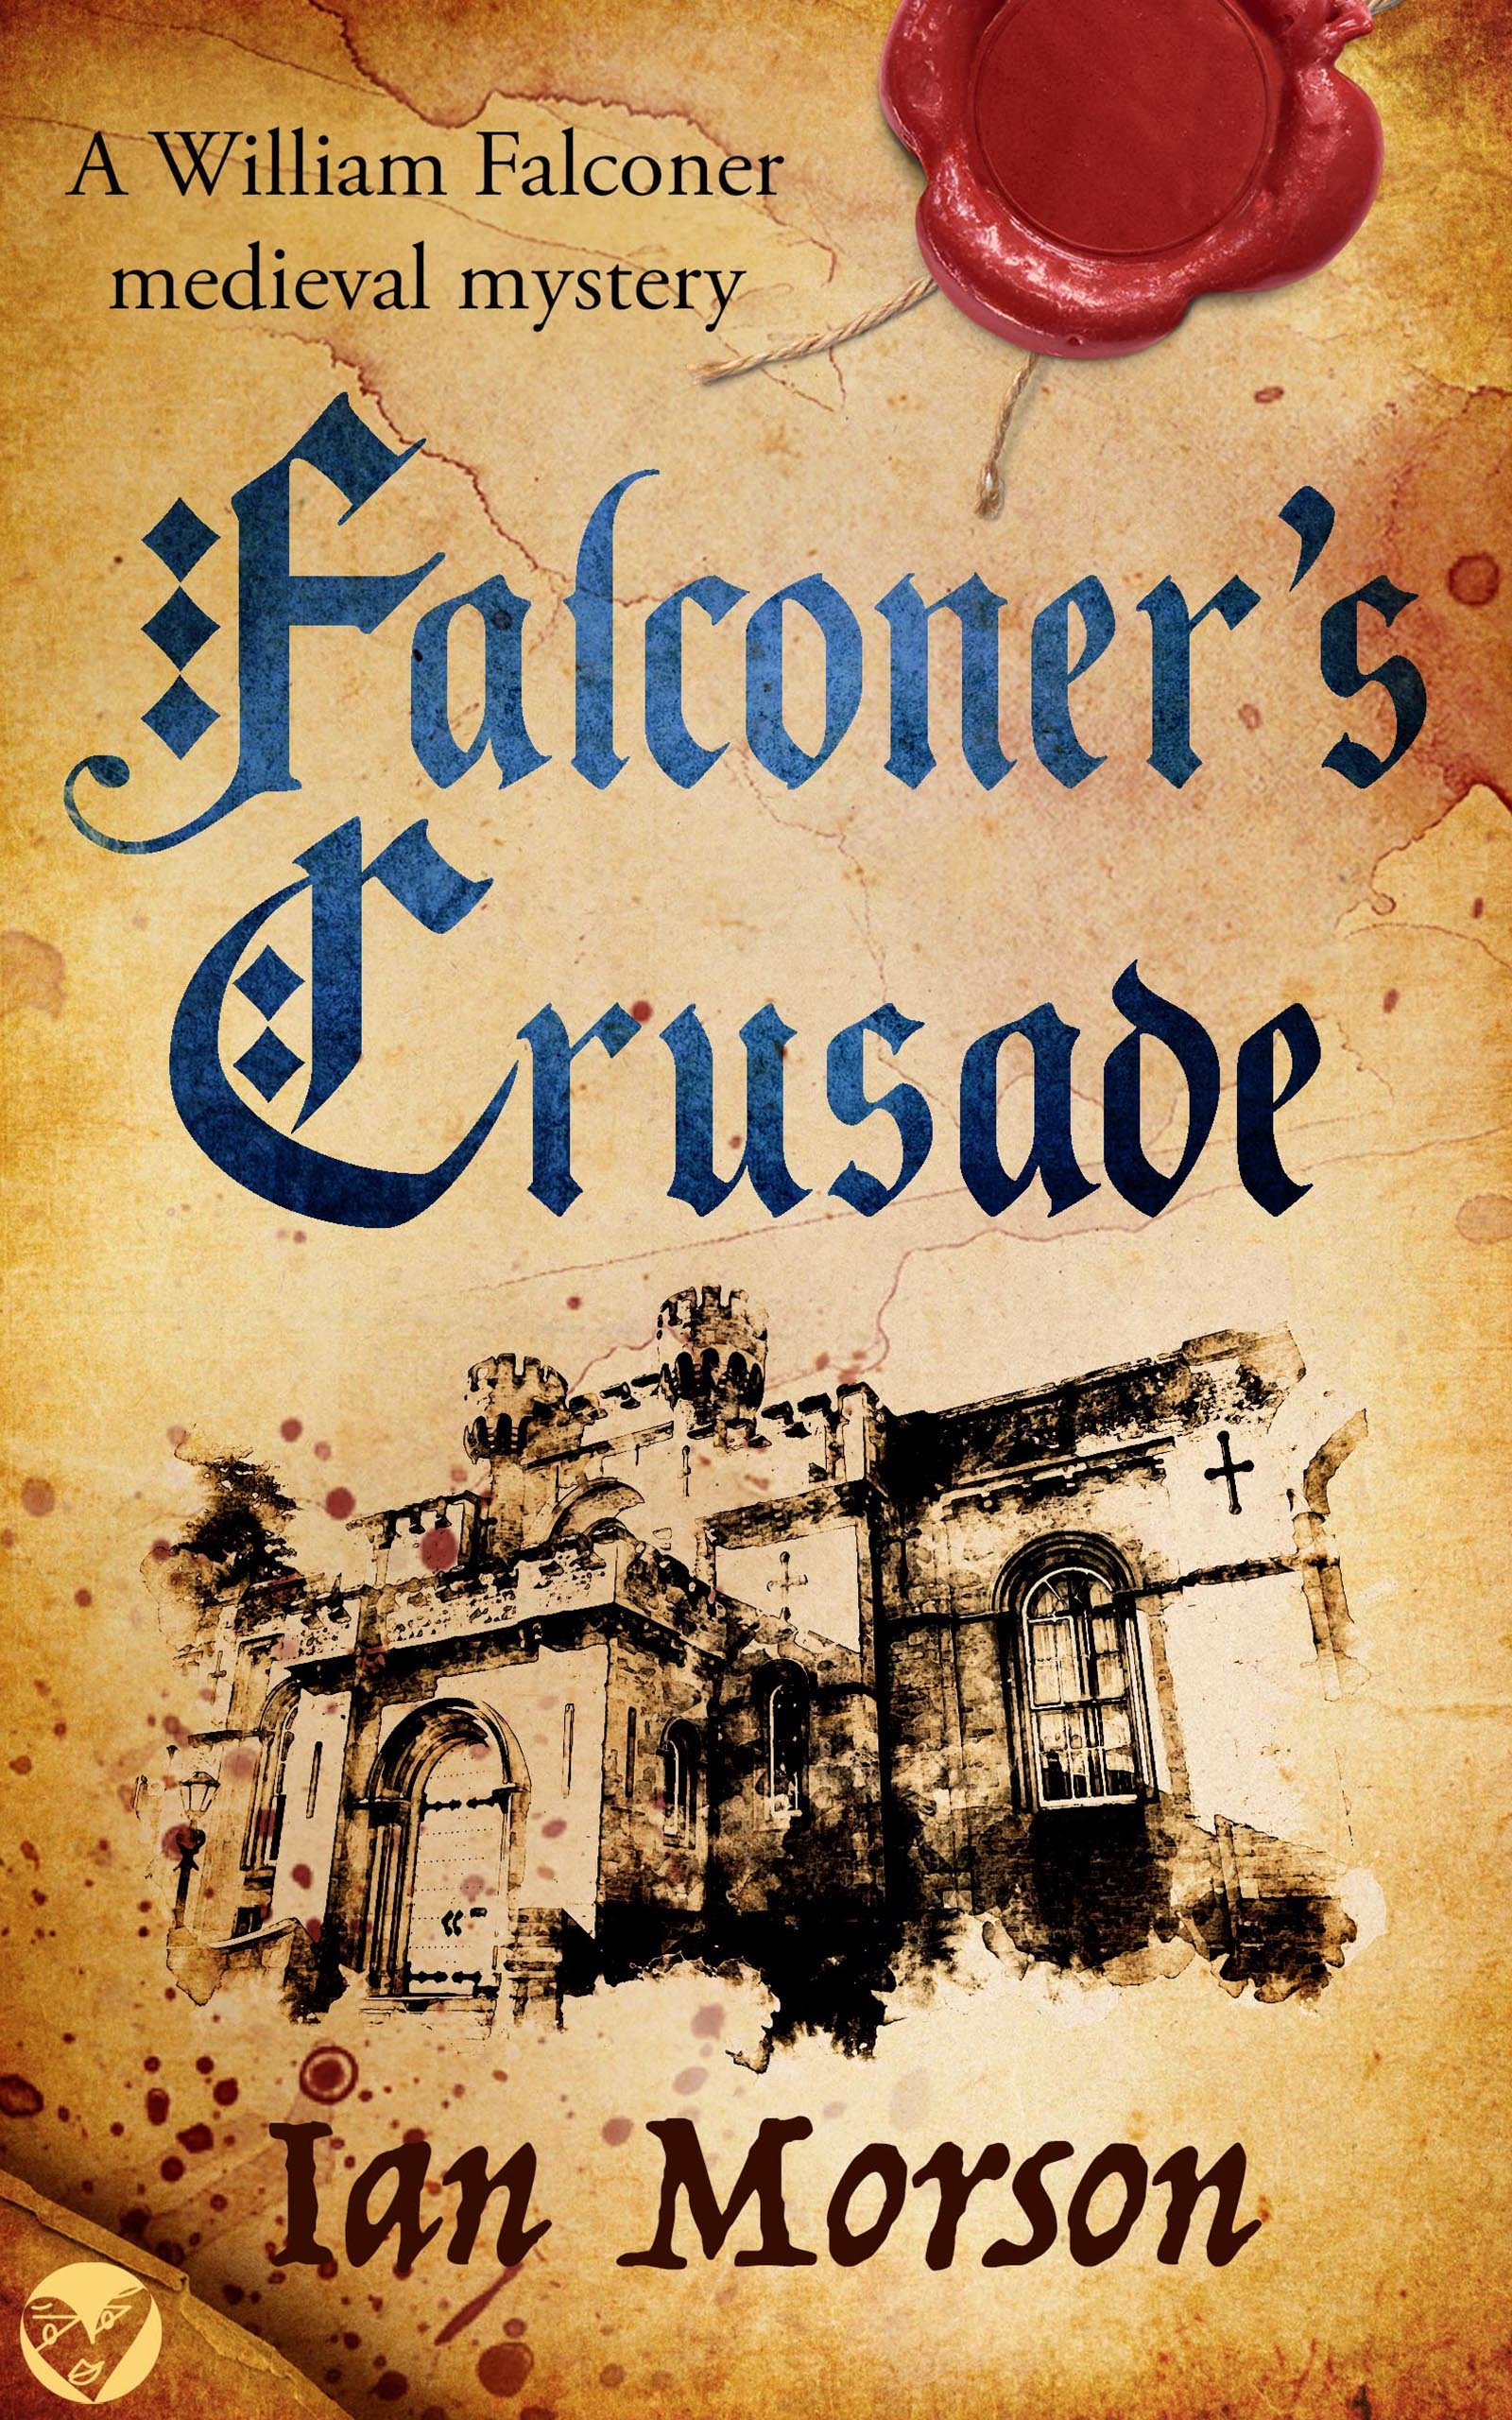 FALCONER'S CRUSADE Cover publish.jpg